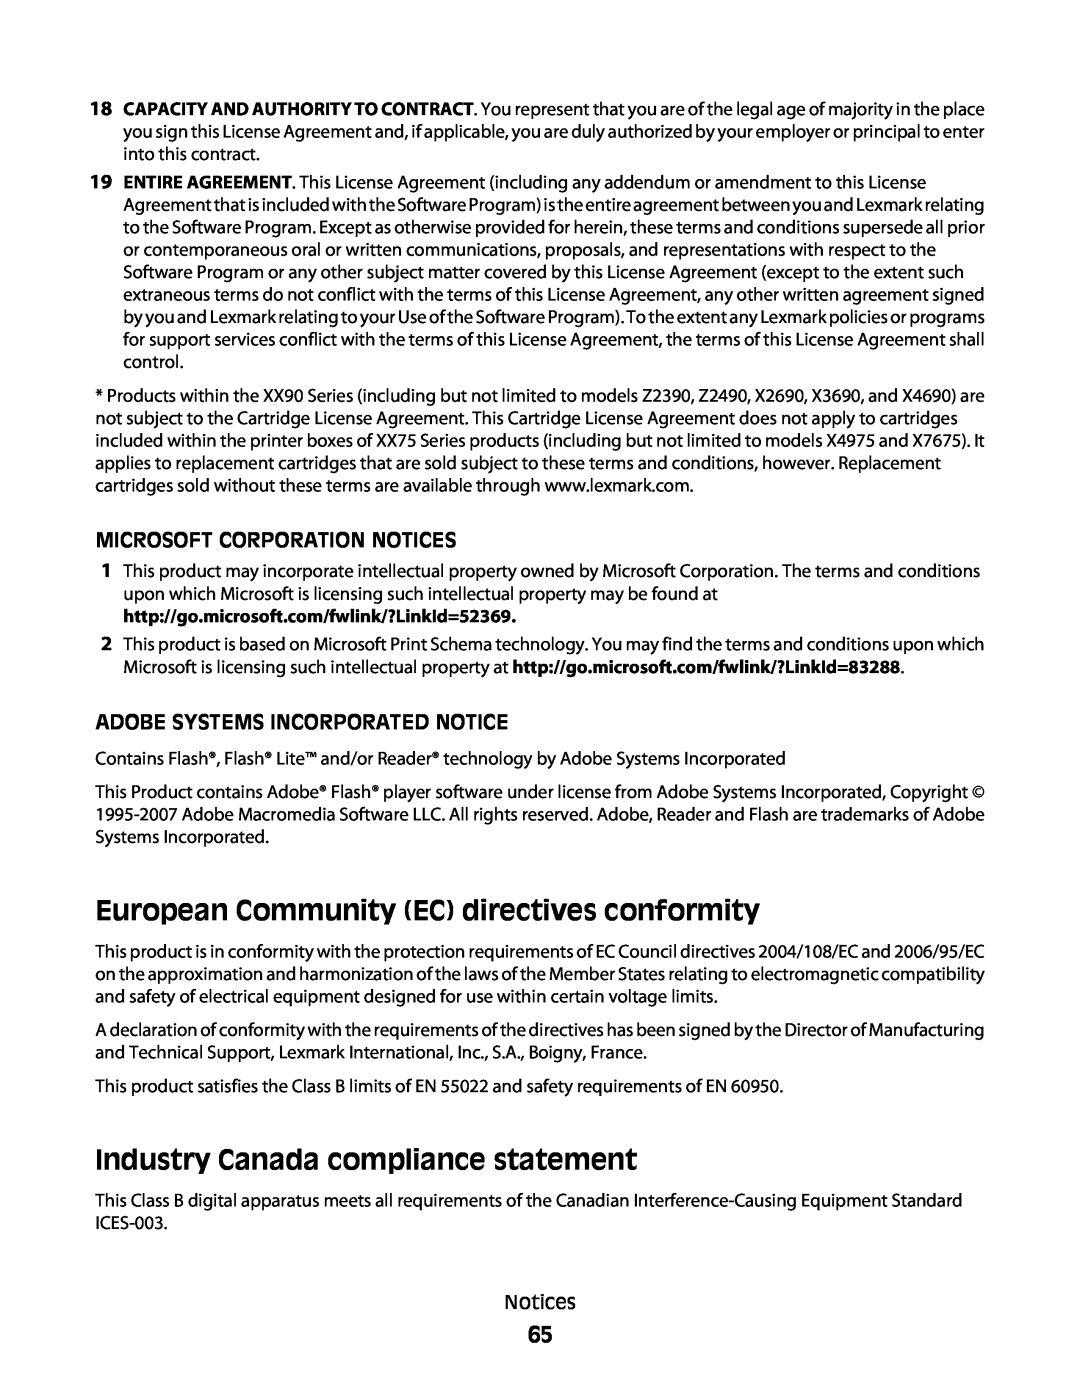 Lexmark 4445, 4433 manual European Community EC directives conformity, Industry Canada compliance statement 